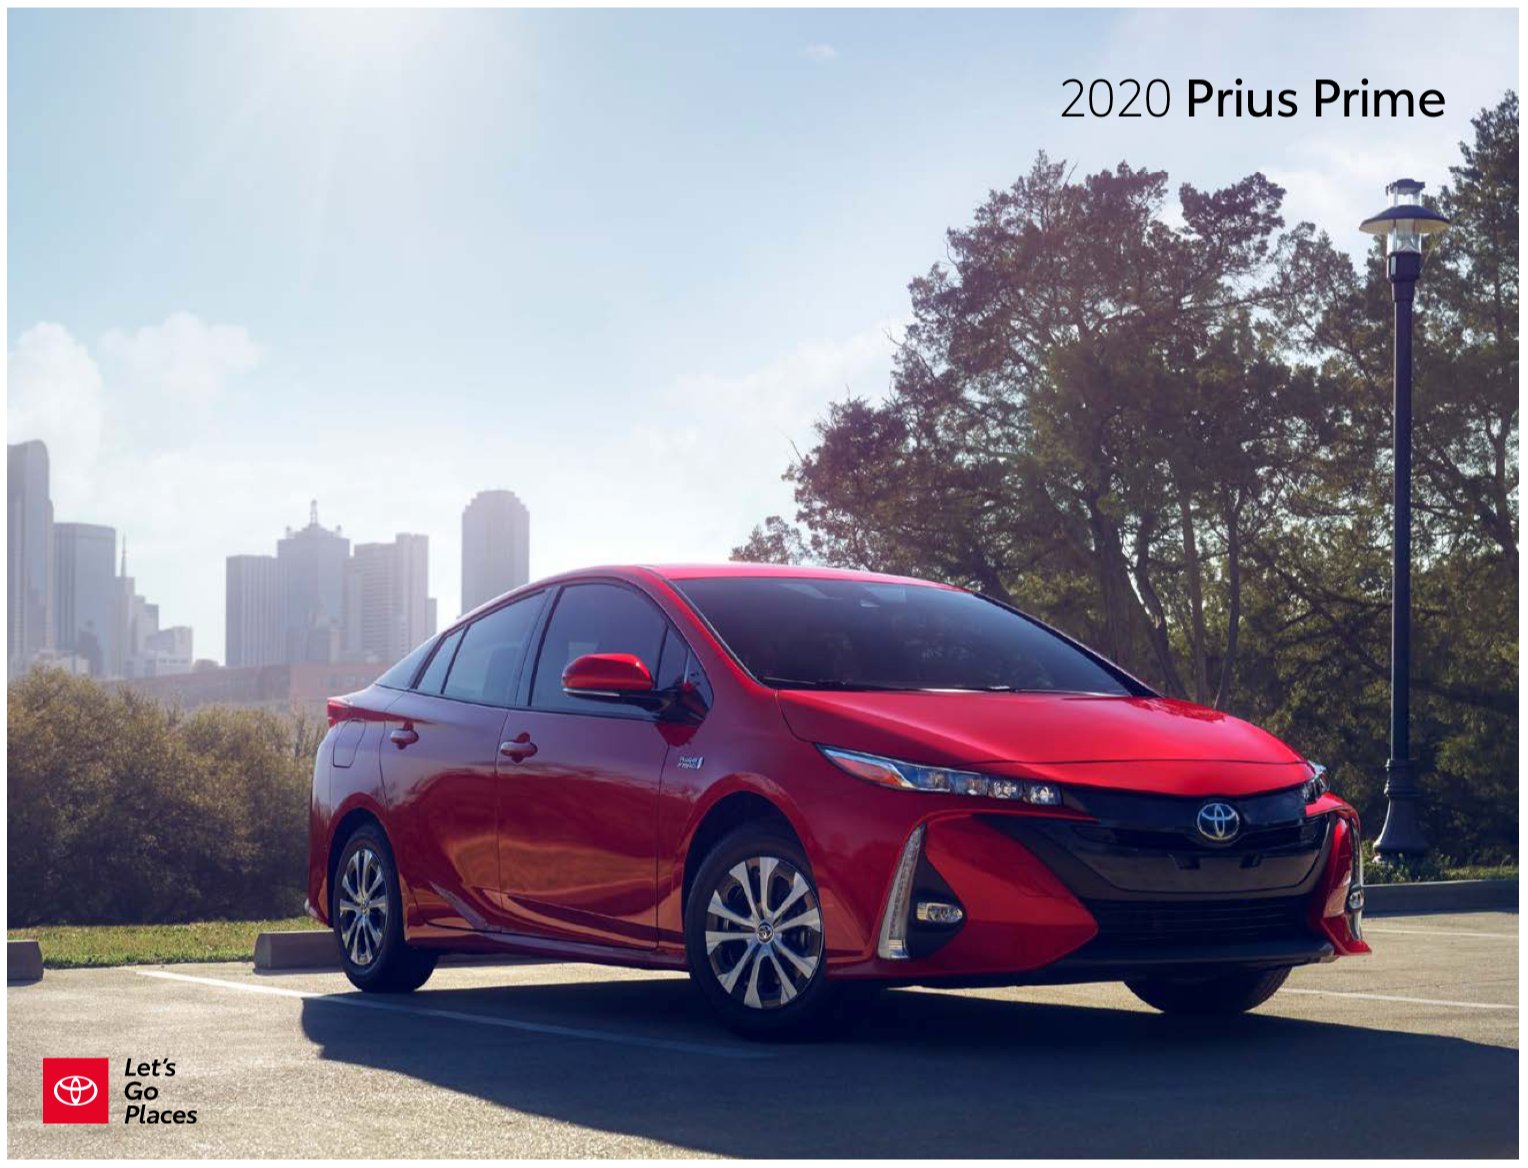 New 2020 Toyota Prius Prime Brochure at Falmouth Toyota, Bourne, MA - Cape Cod Toyota Dealership